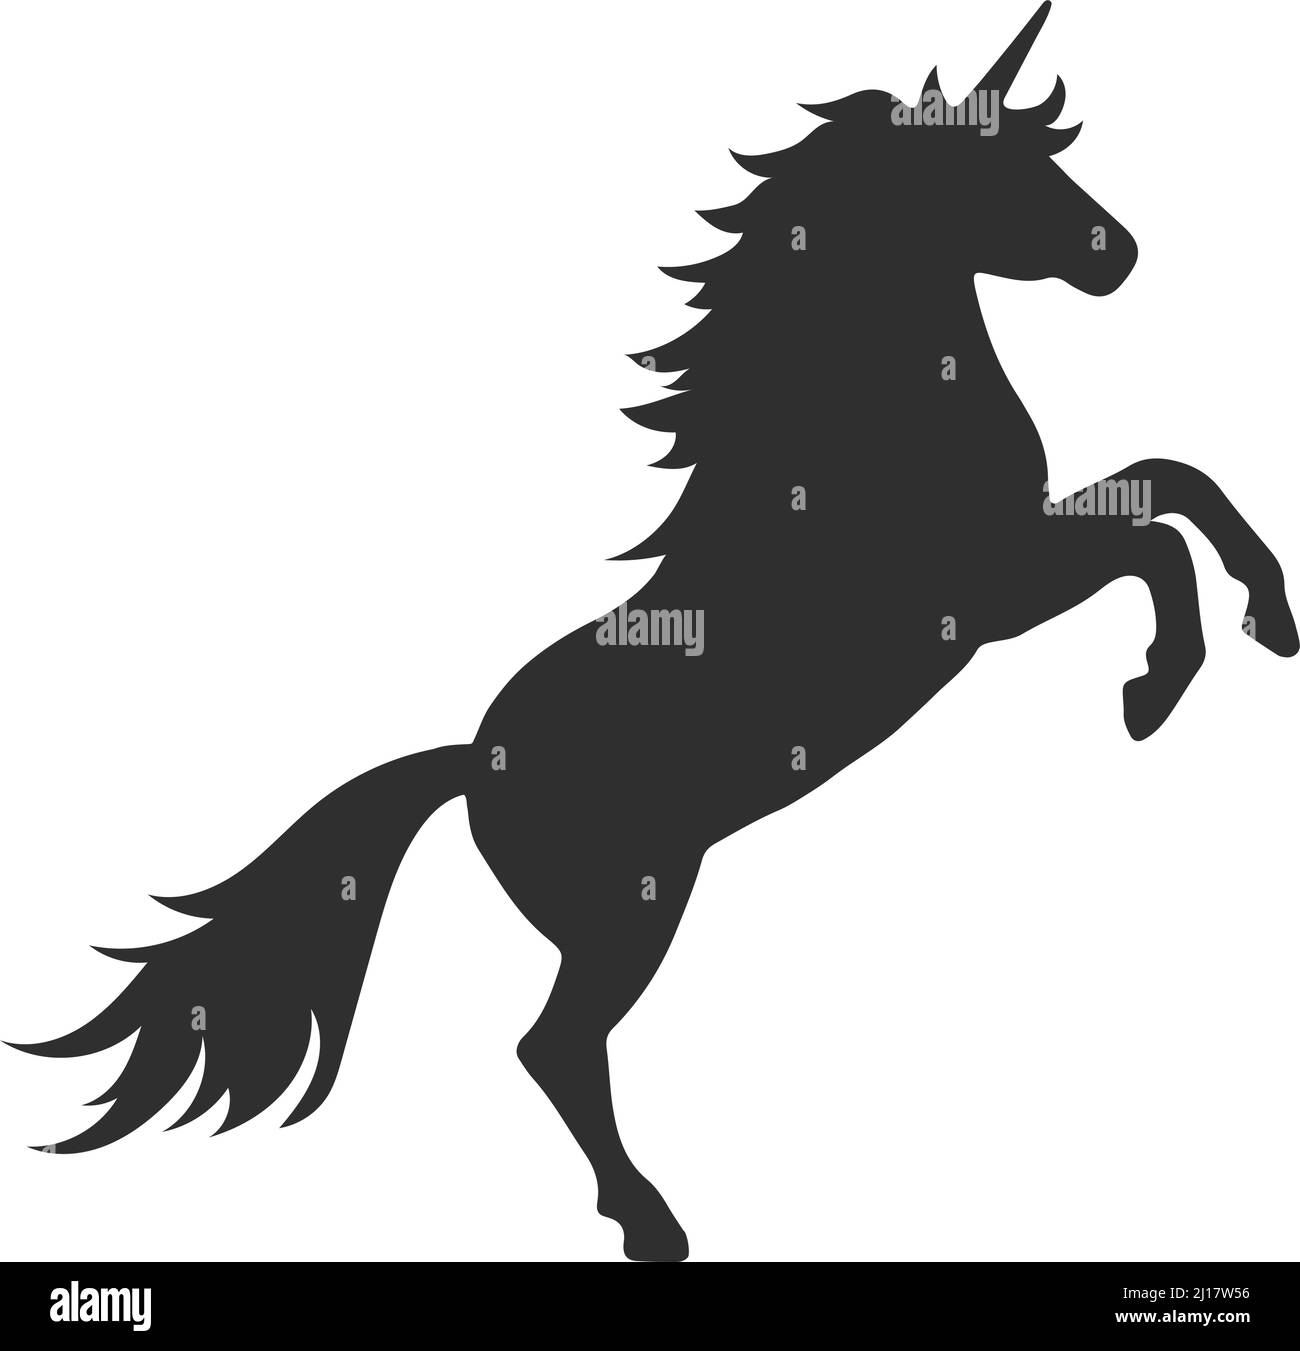 Legendary mythic horse. Reared up unicorn black silhouette Stock Vector